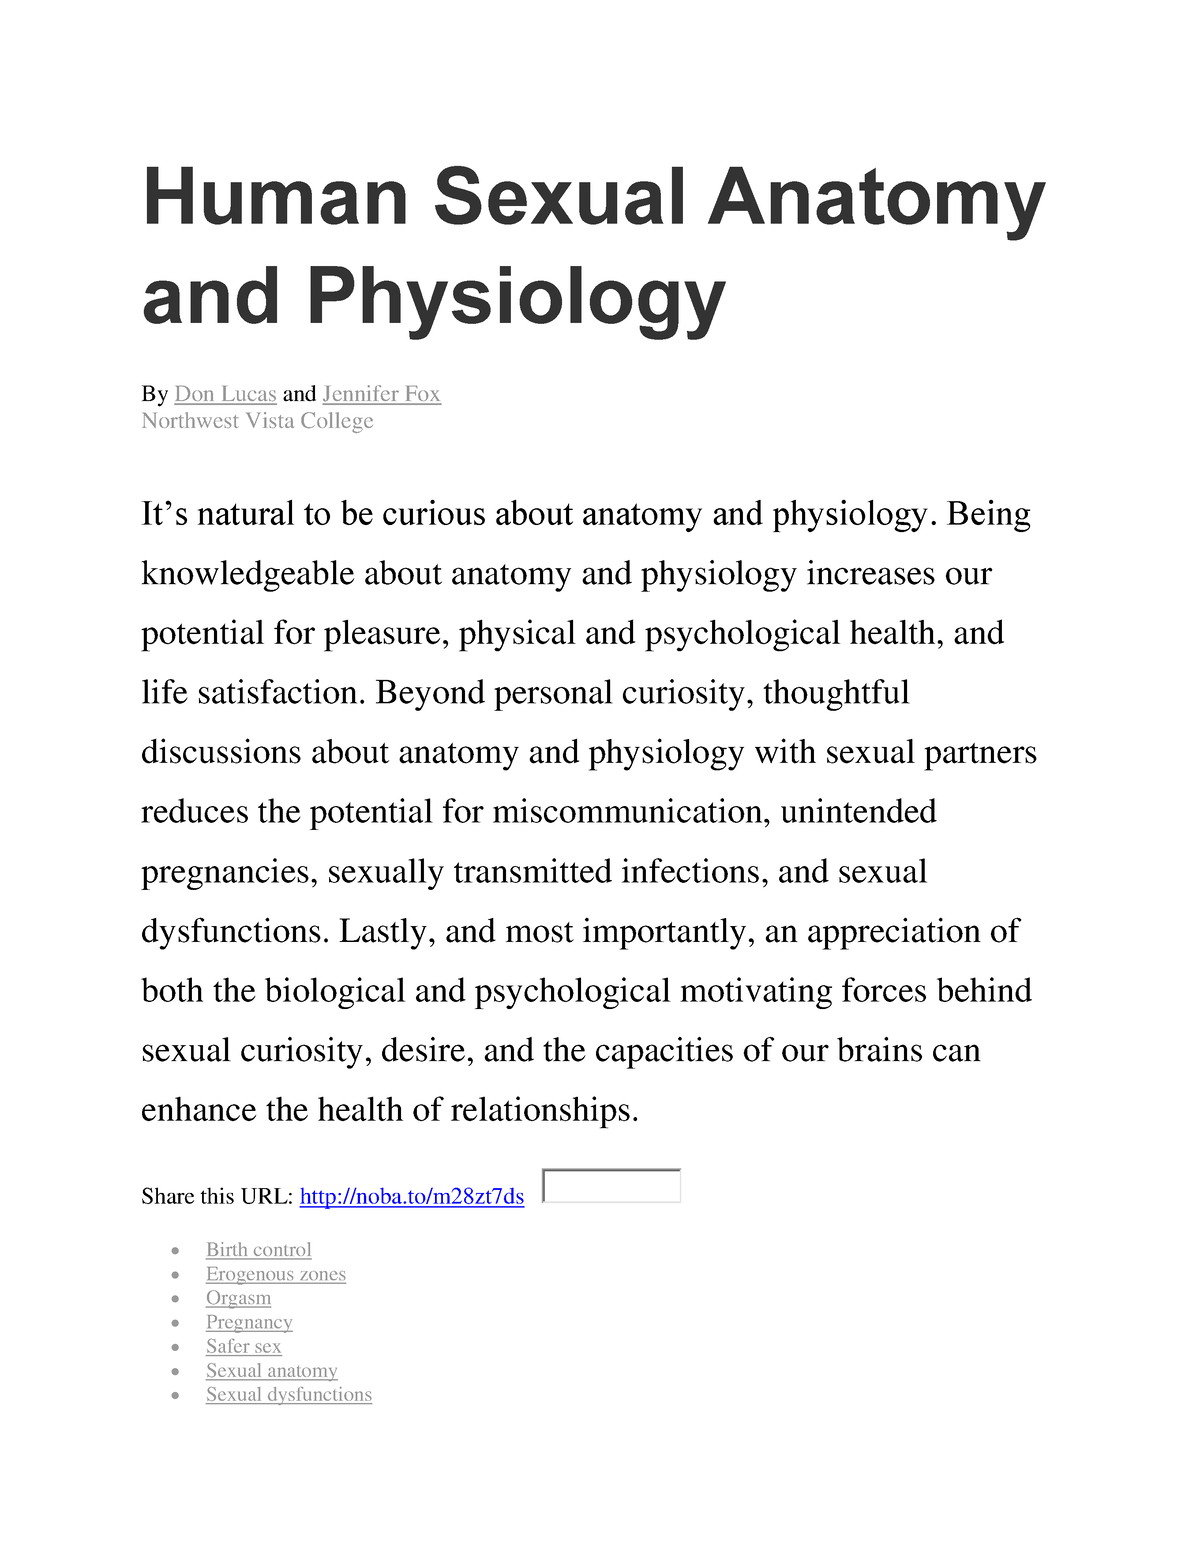 Human Sexual Anatomy And Physiology Human Sexual Anatomy And Physiology By Don Lucas And